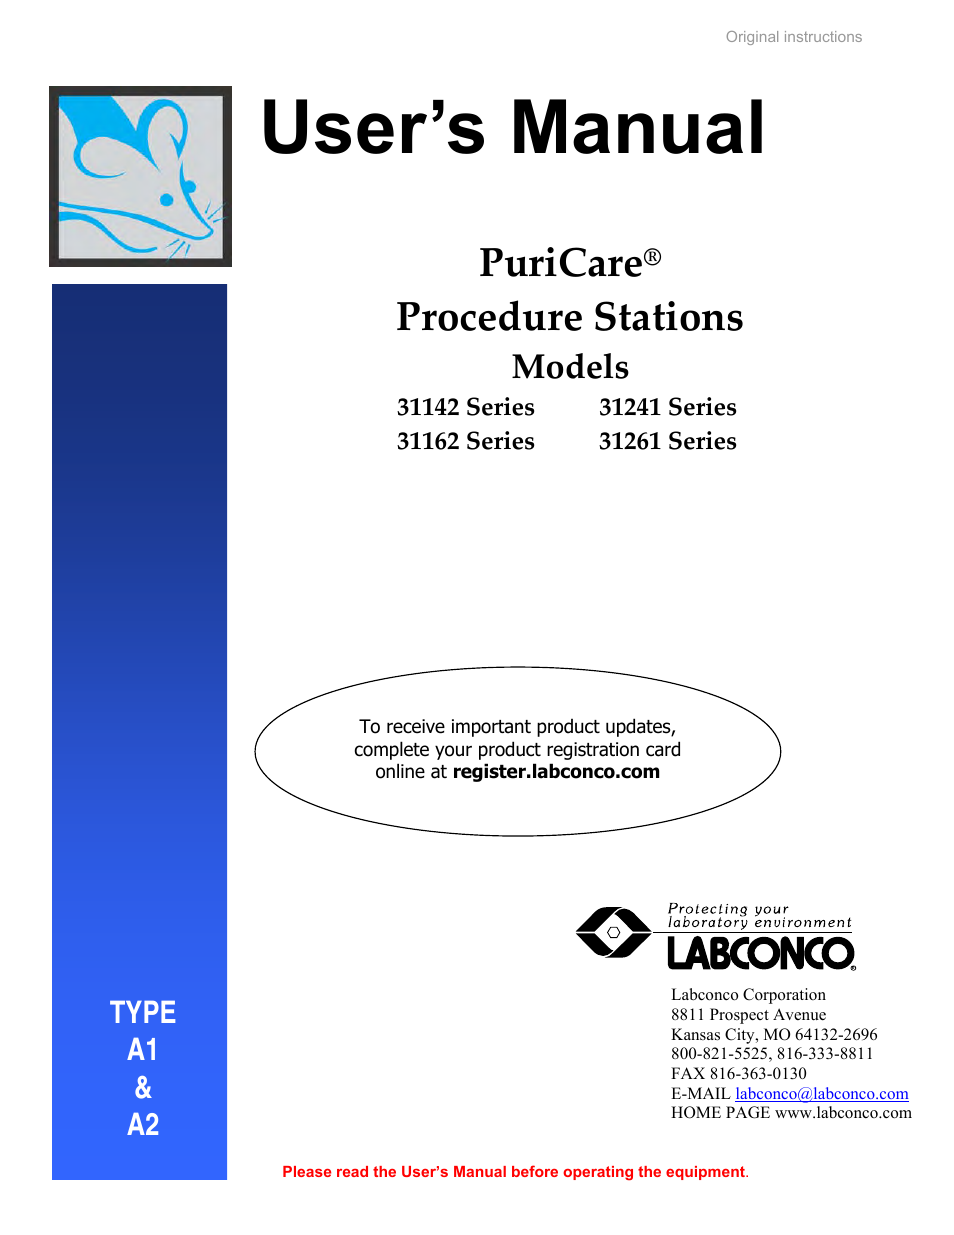 PuriCare Procedure Stations 31261 Series